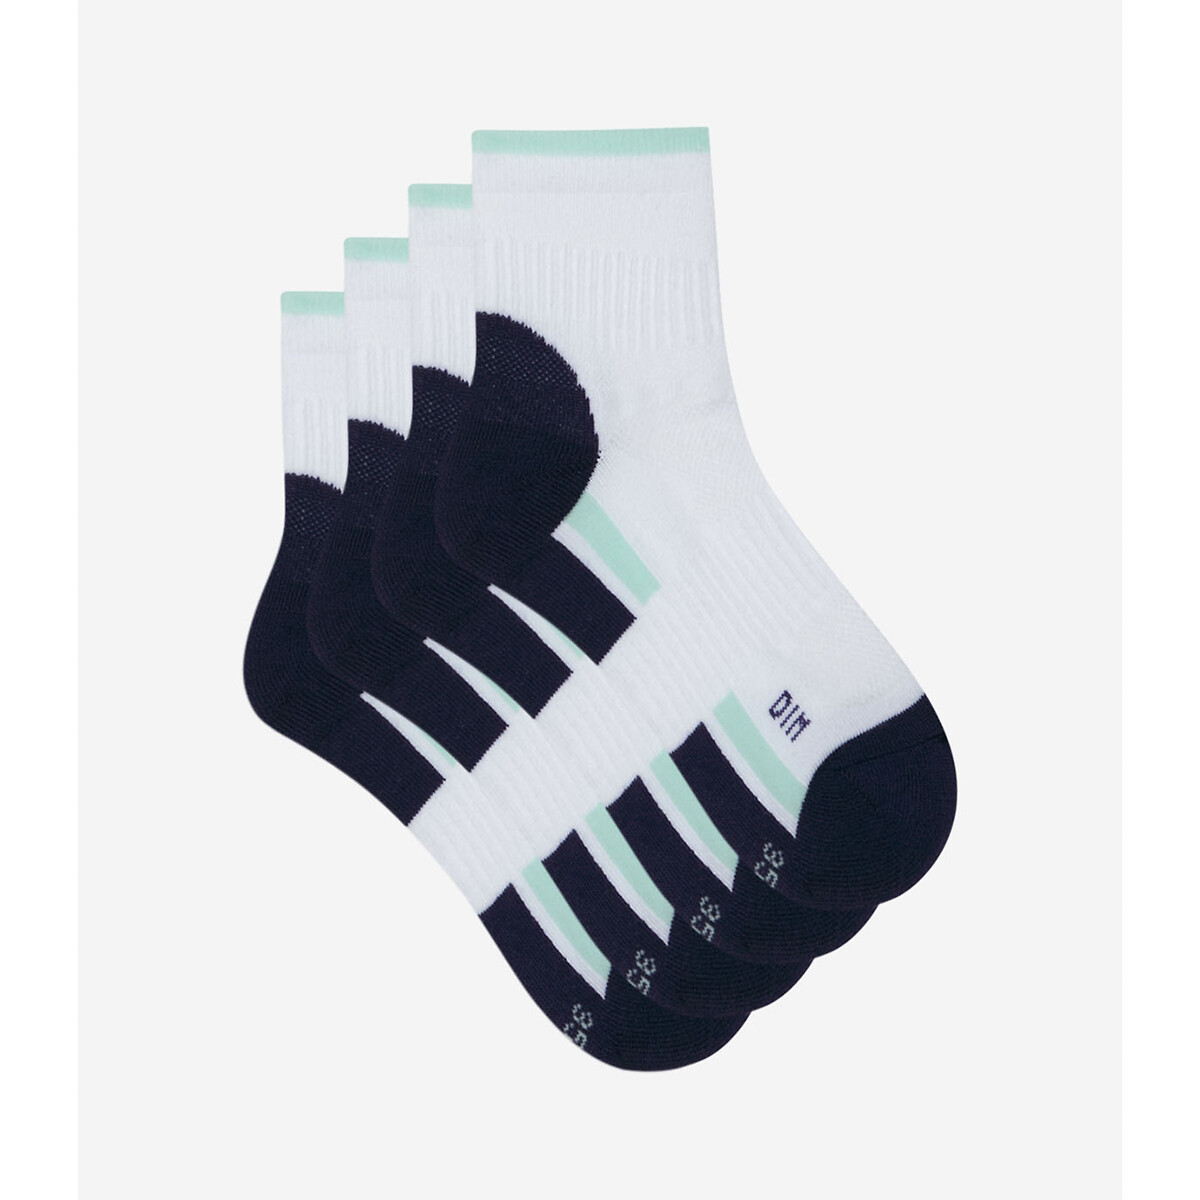 Pack of 2 Pairs of Medium Impact Socks